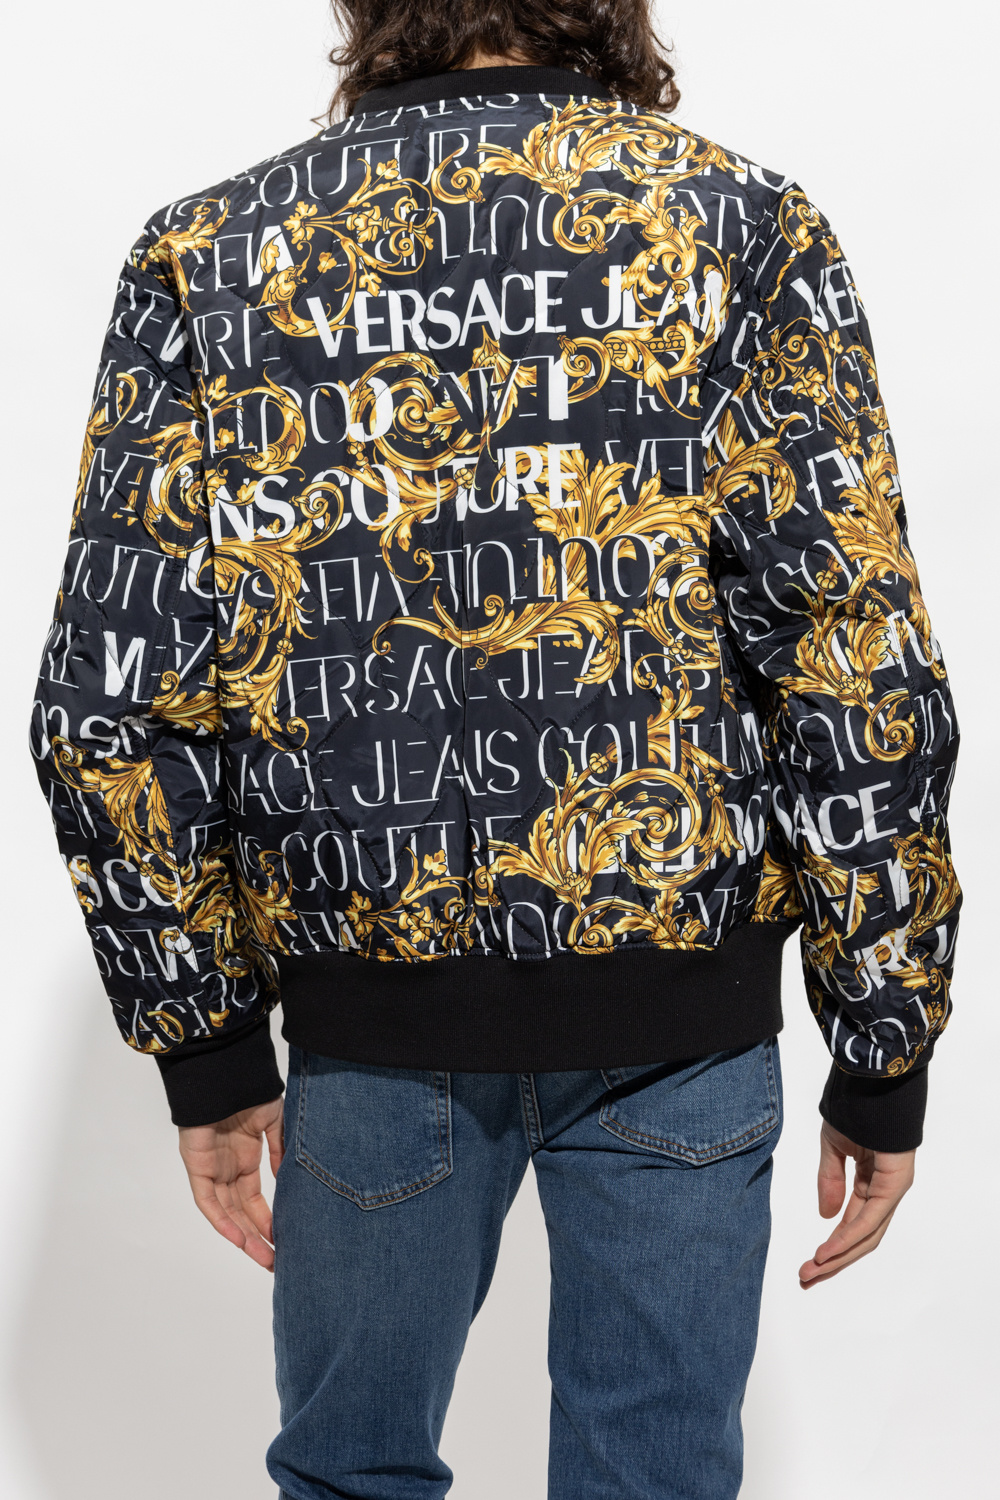 Versace Jeans Couture Cerruti 1881 crew neck sweater